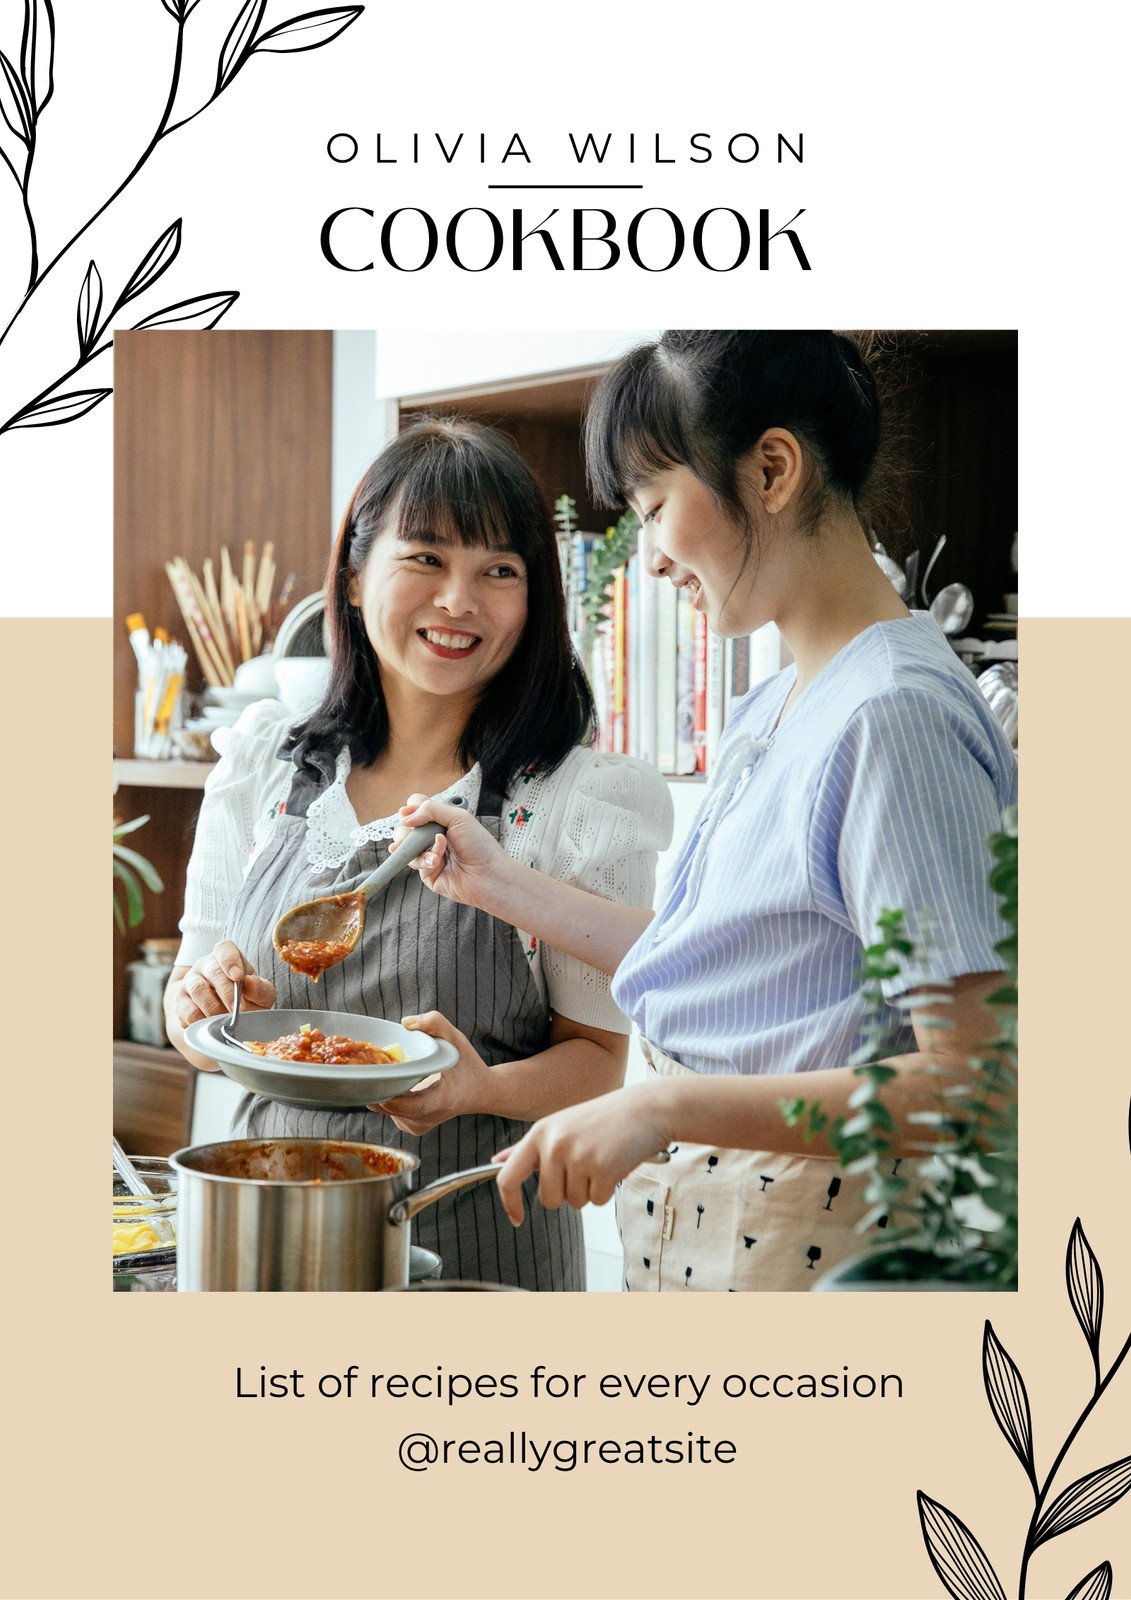 https://marketplace.canva.com/EAFzO39yv_o/1/0/1131w/canva-white-and-beige-modern-cookbook-a4-document-ZUUqgkCToA4.jpg